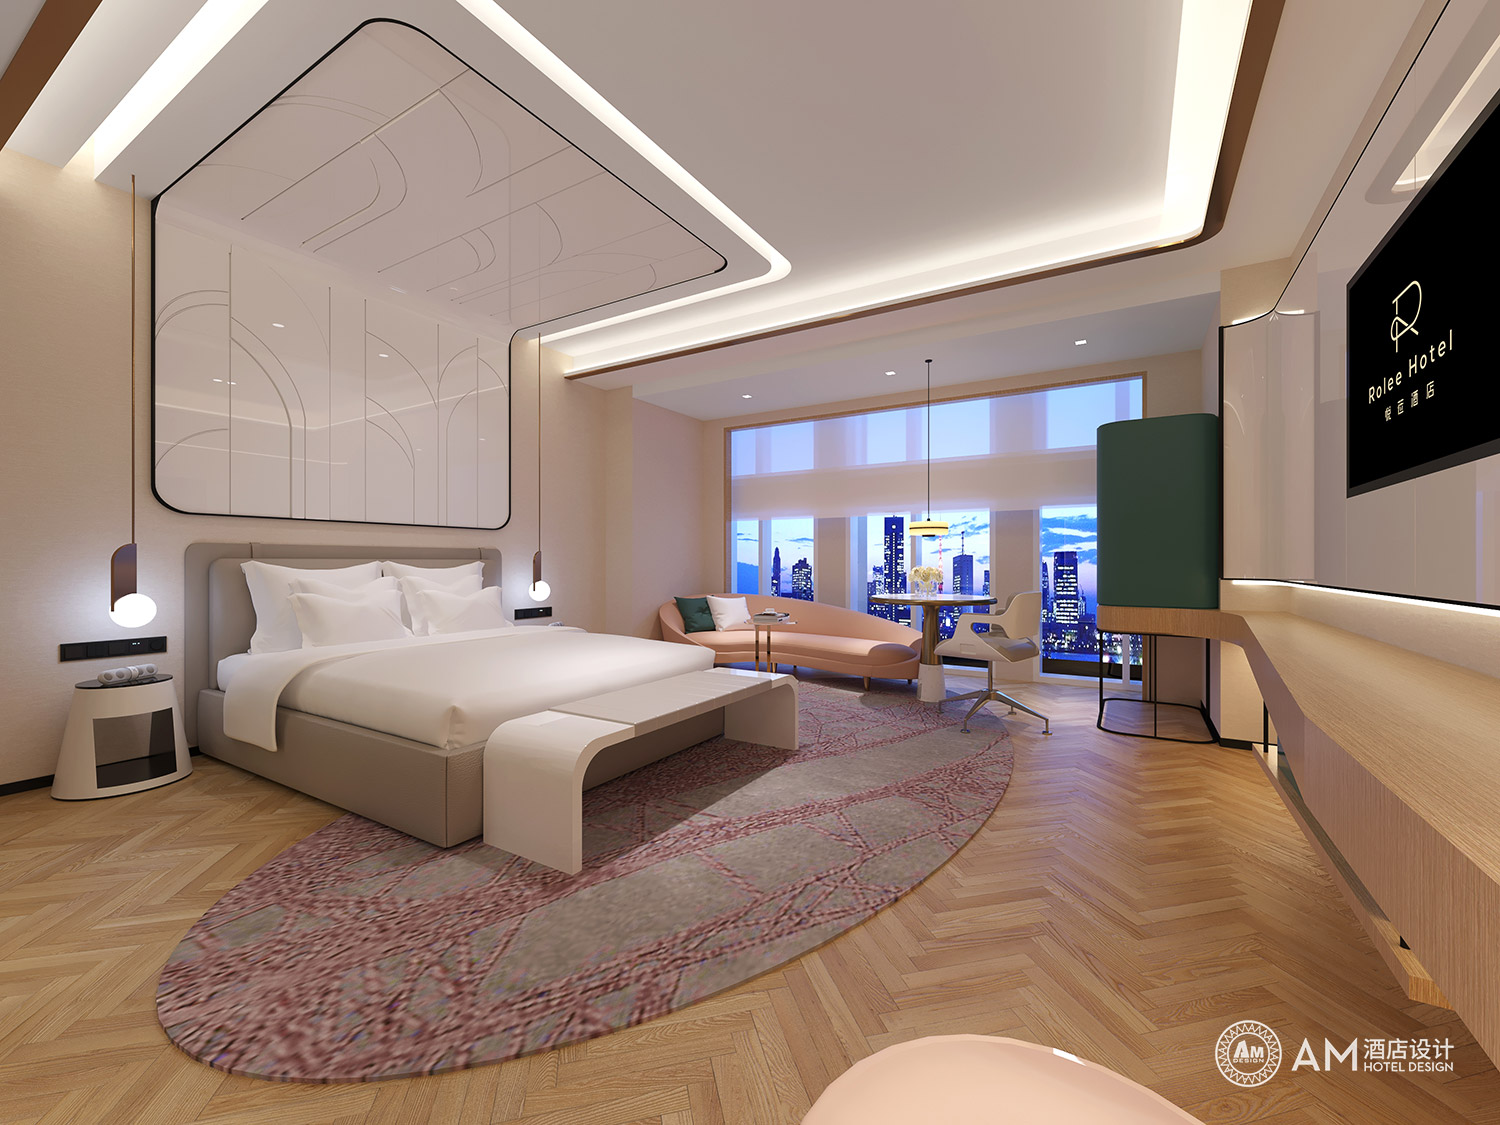 AM DESIGN | Xi'an Yuelai Boutique Hotel Guest Room Design